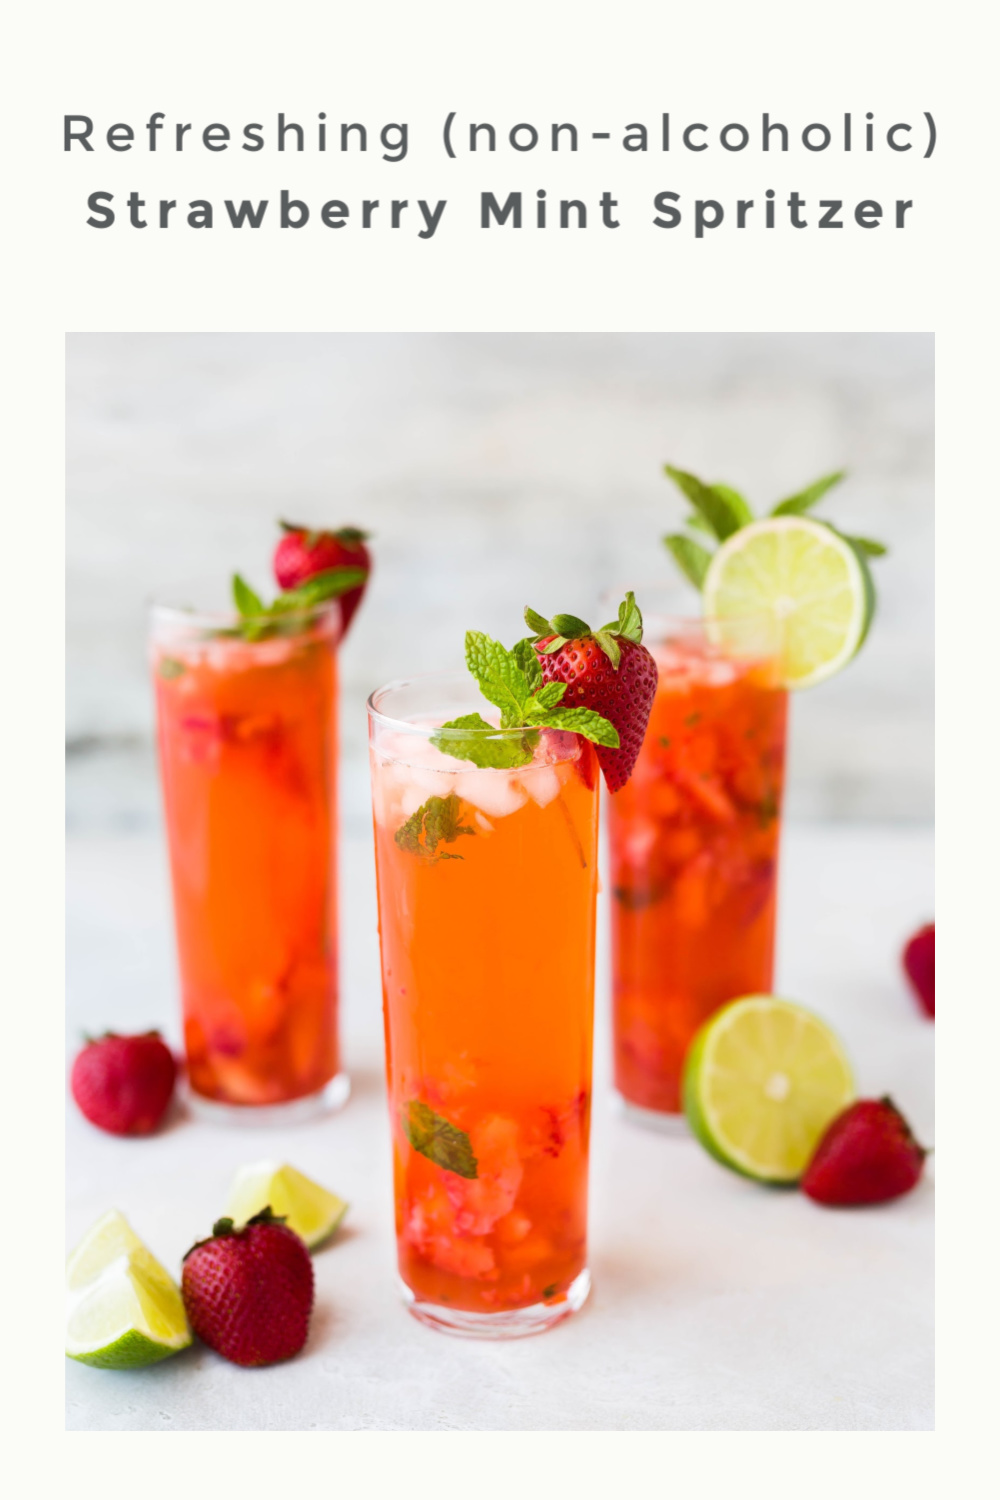 Refreshing Strawberry Mint Spritzer (non-alcoholic)